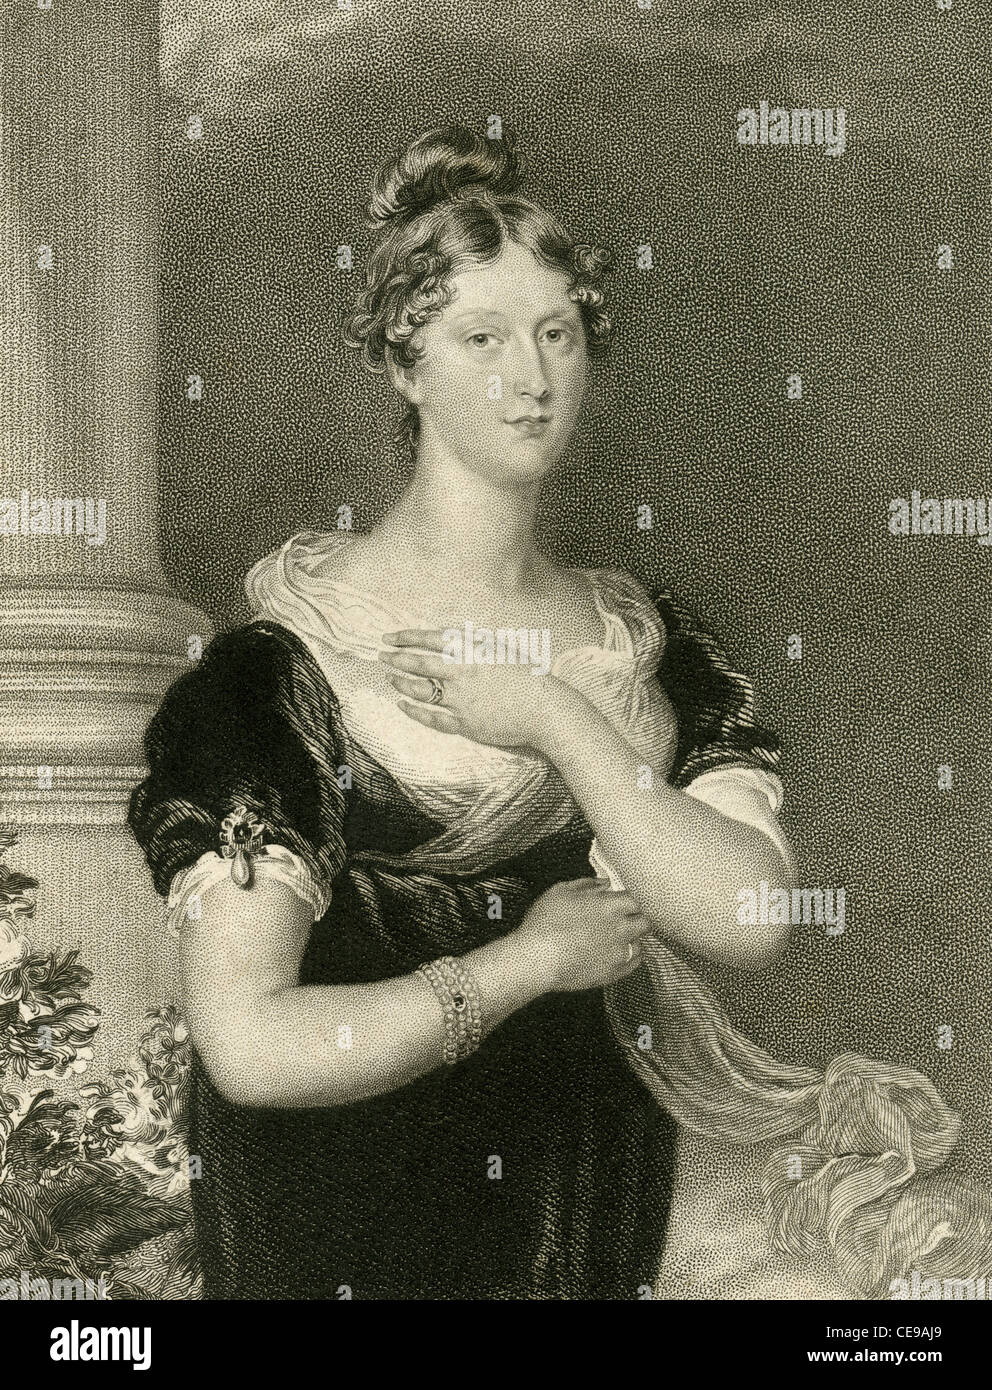 1830 engraving of Princess Charlotte of Wales. Stock Photo